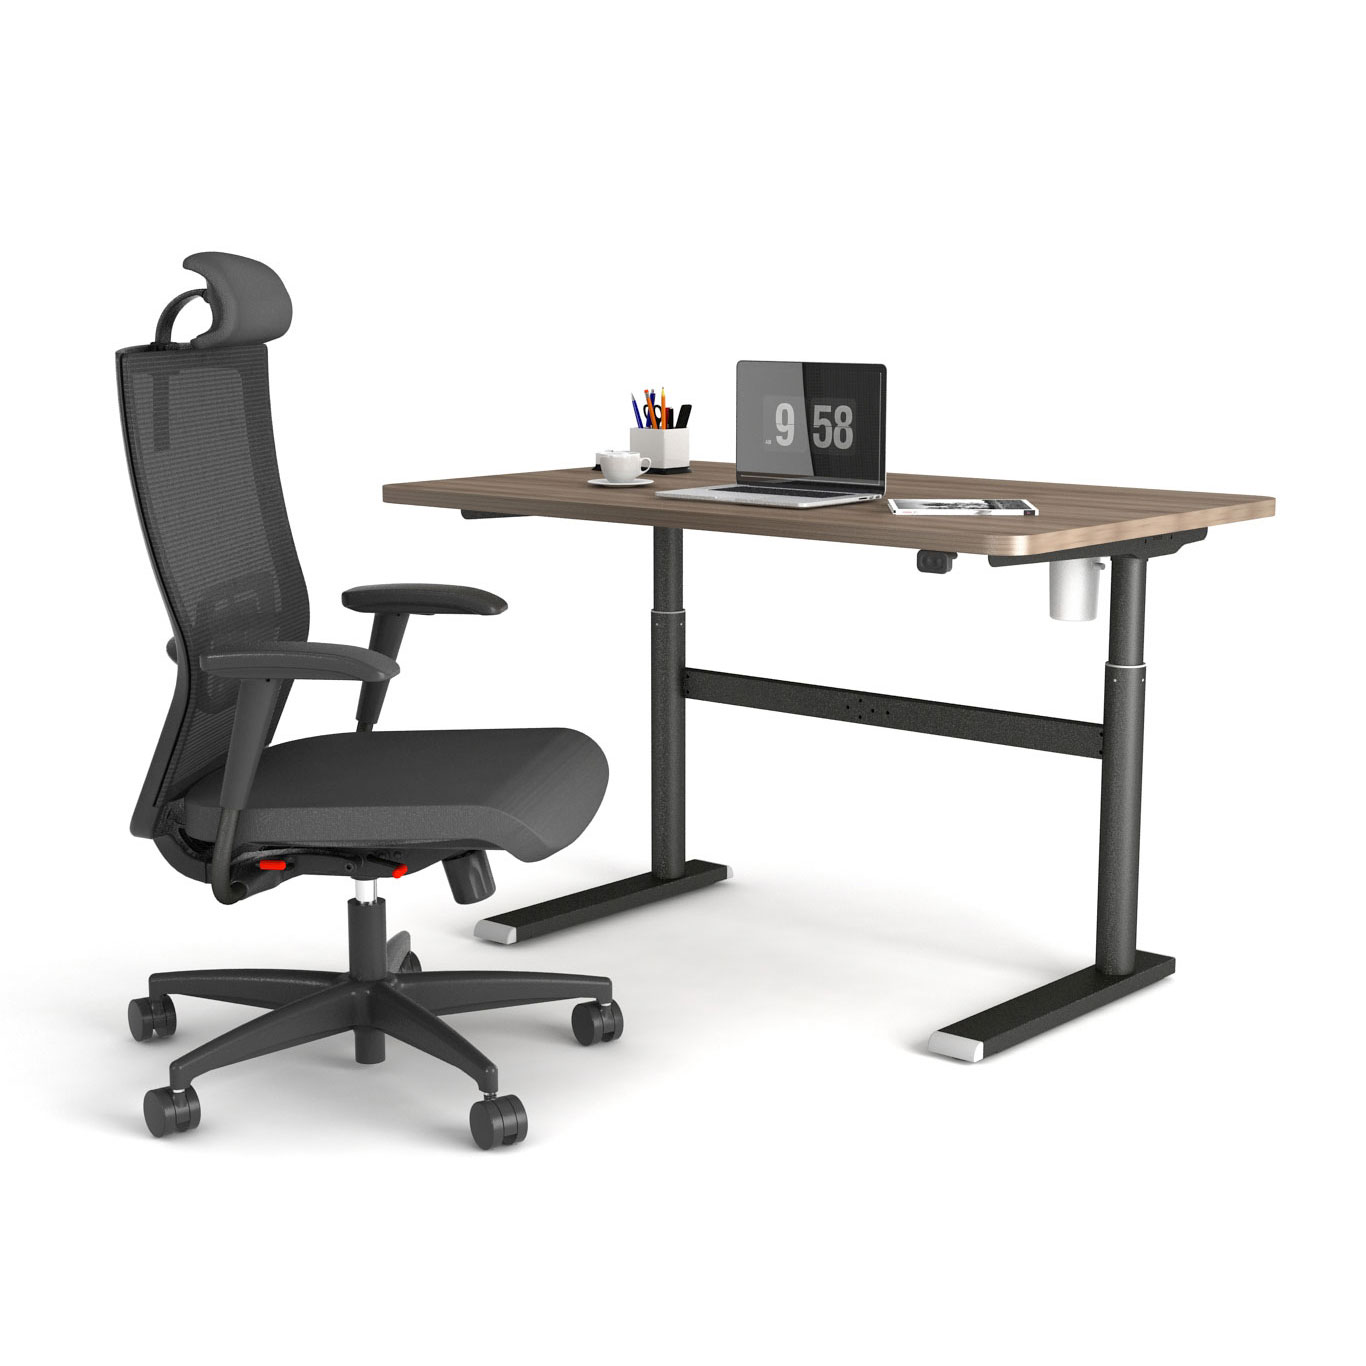 Saya chair in black with Vertigo R single motor height adjustable table